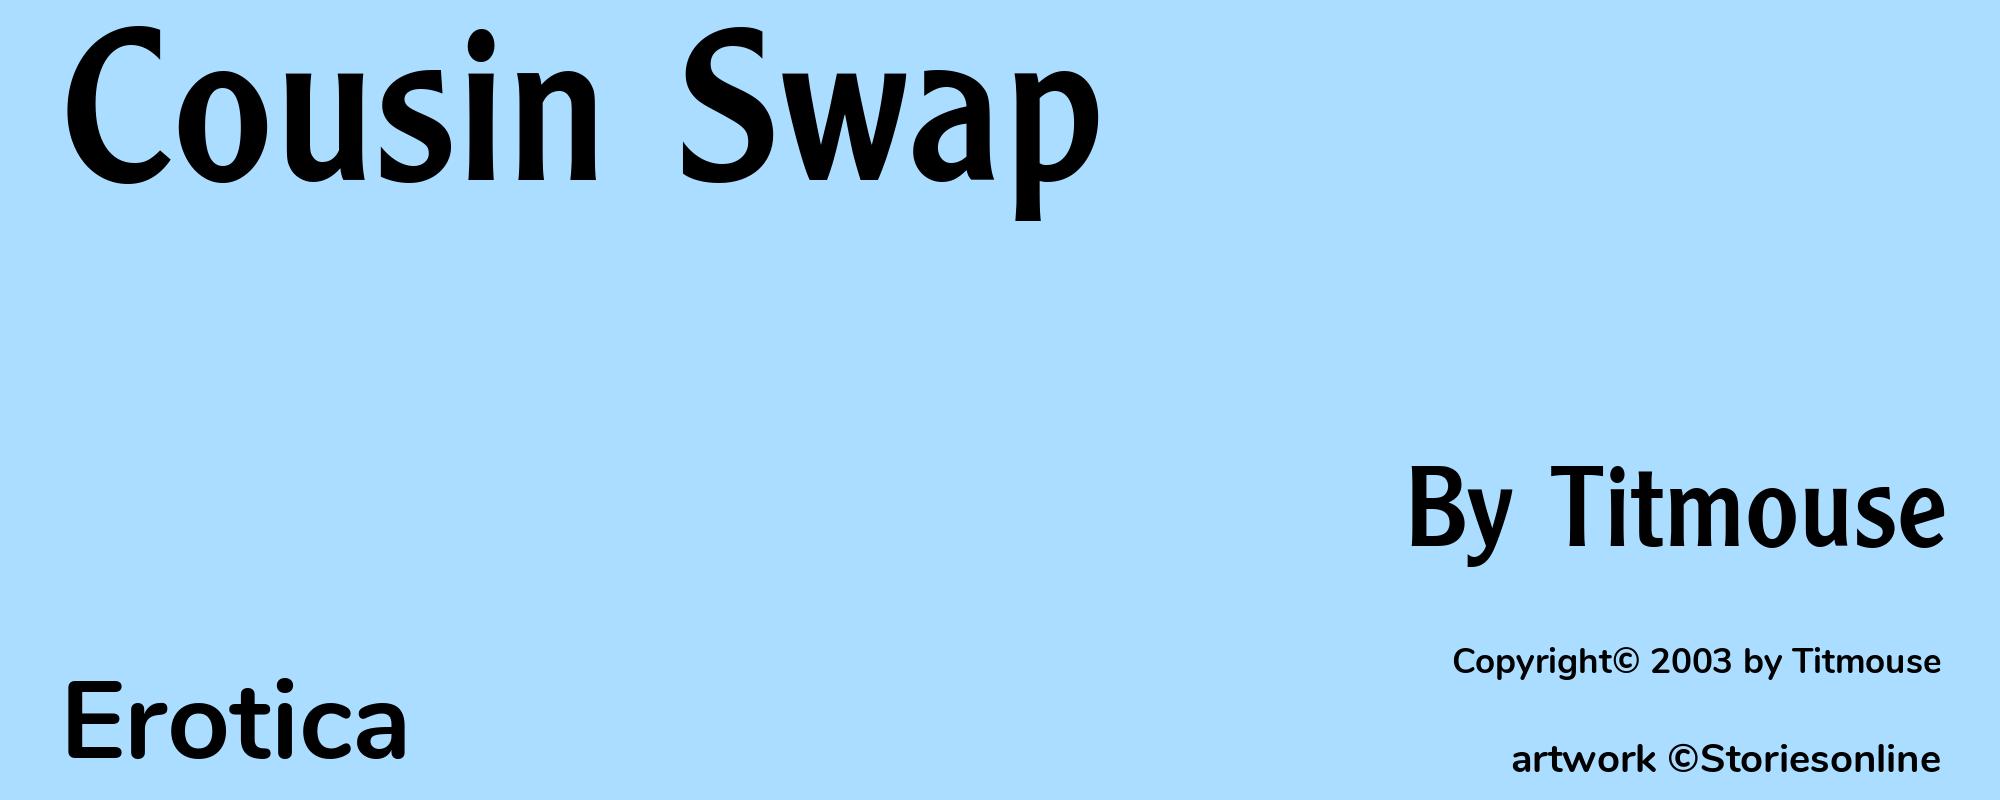 Cousin Swap - Cover